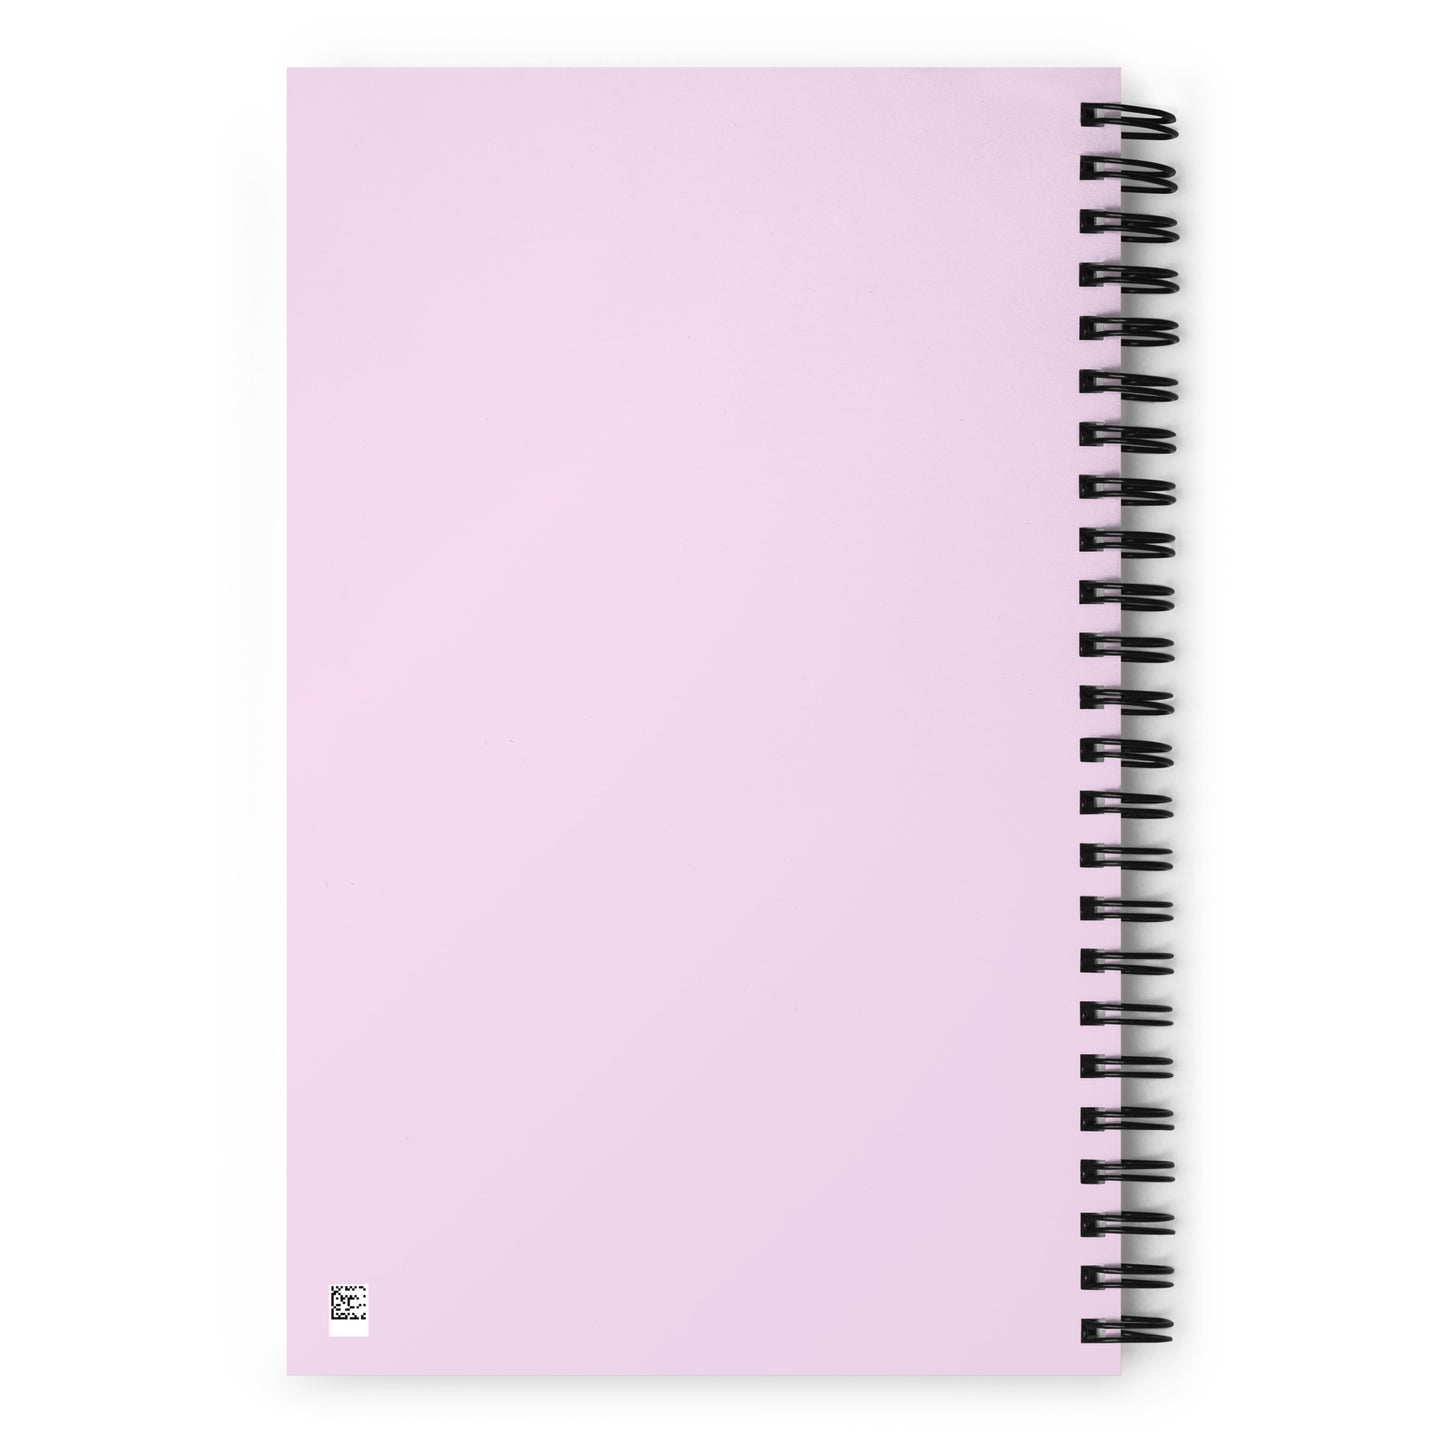 Sakura Spiral notebook